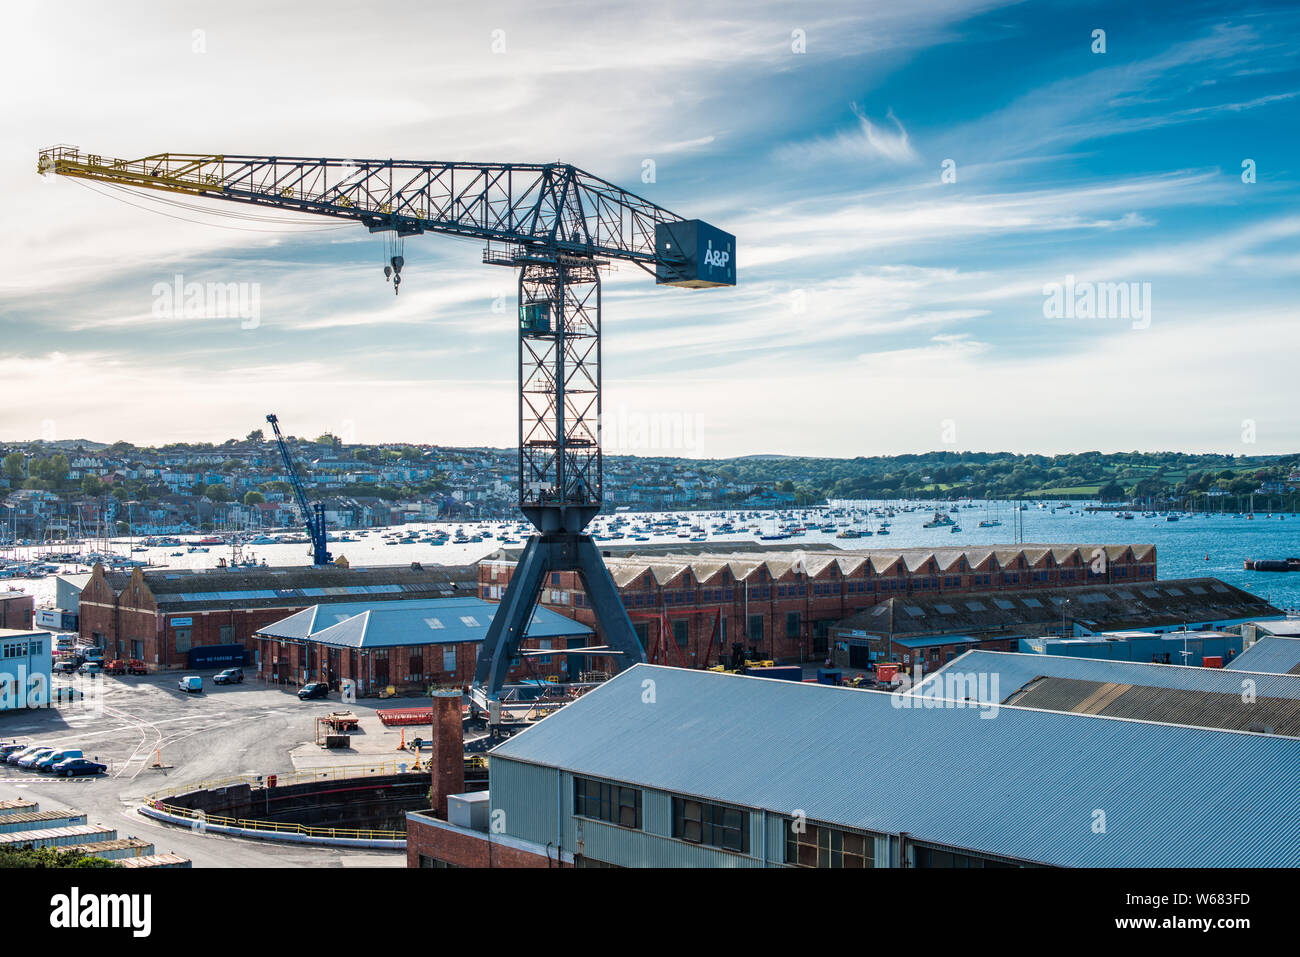 Falmouth Pendennis Shipyard and docks, Cornwall, England, UK. Stock Photo